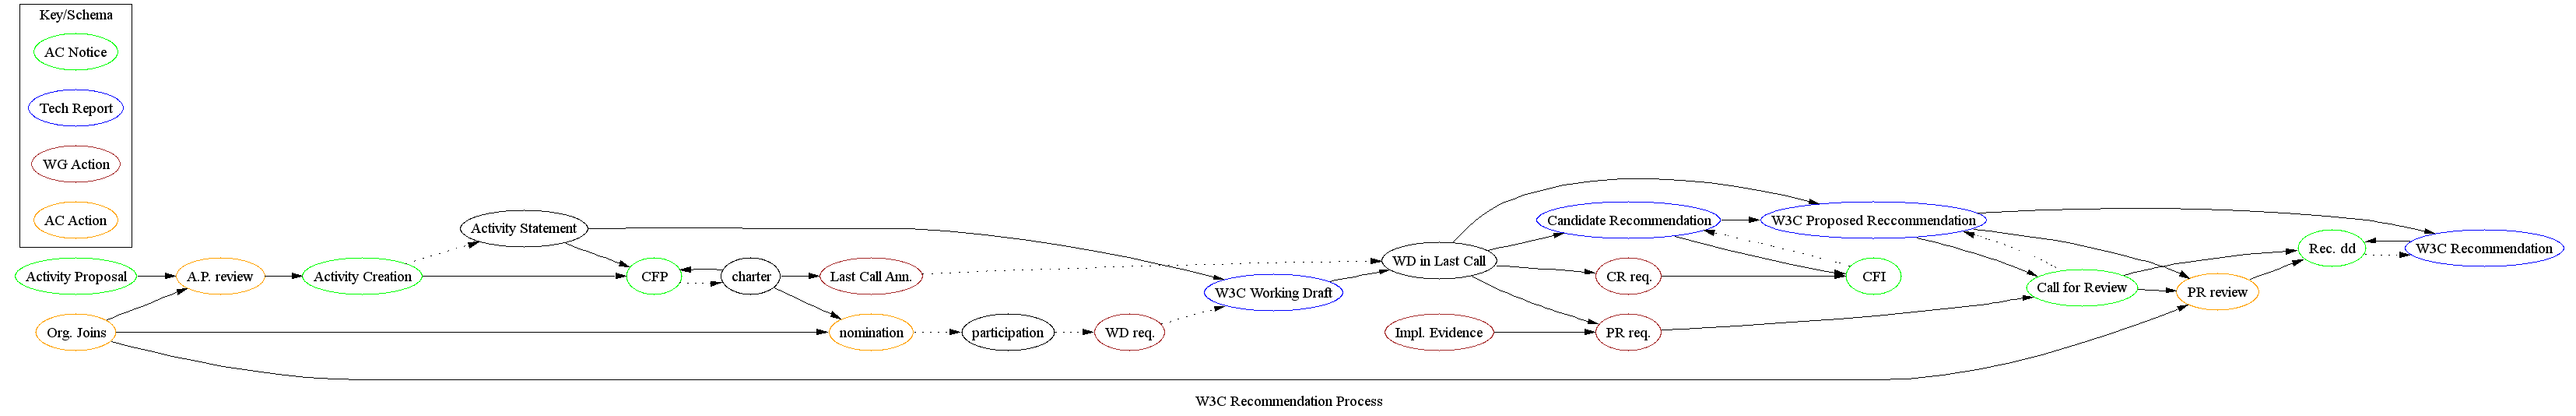 W3C Activity process diagram